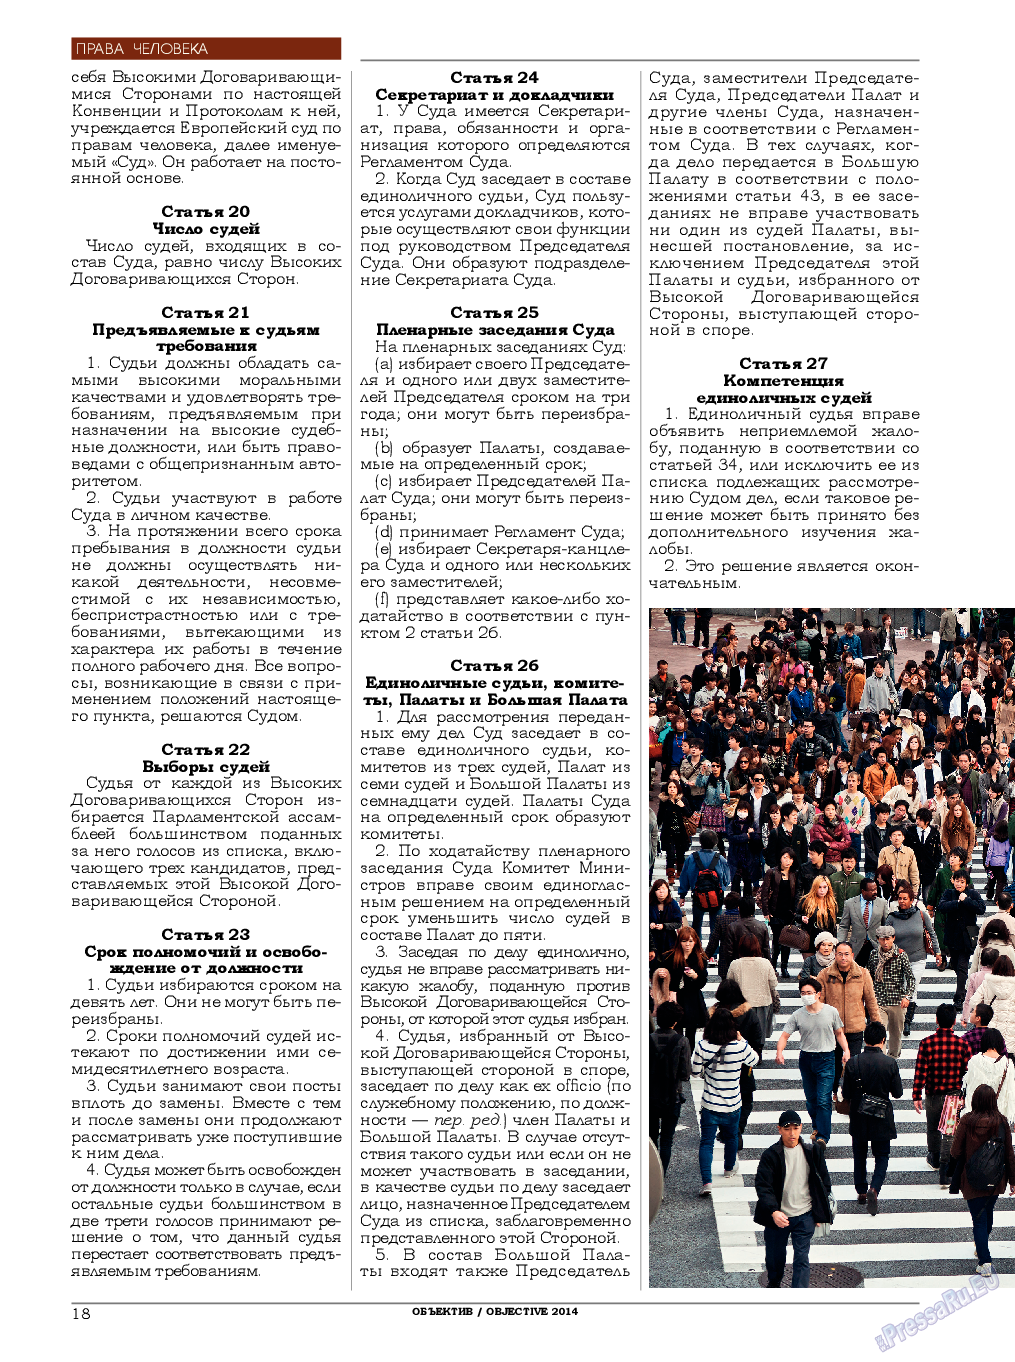 Объектив EU, журнал. 2014 №2 стр.18